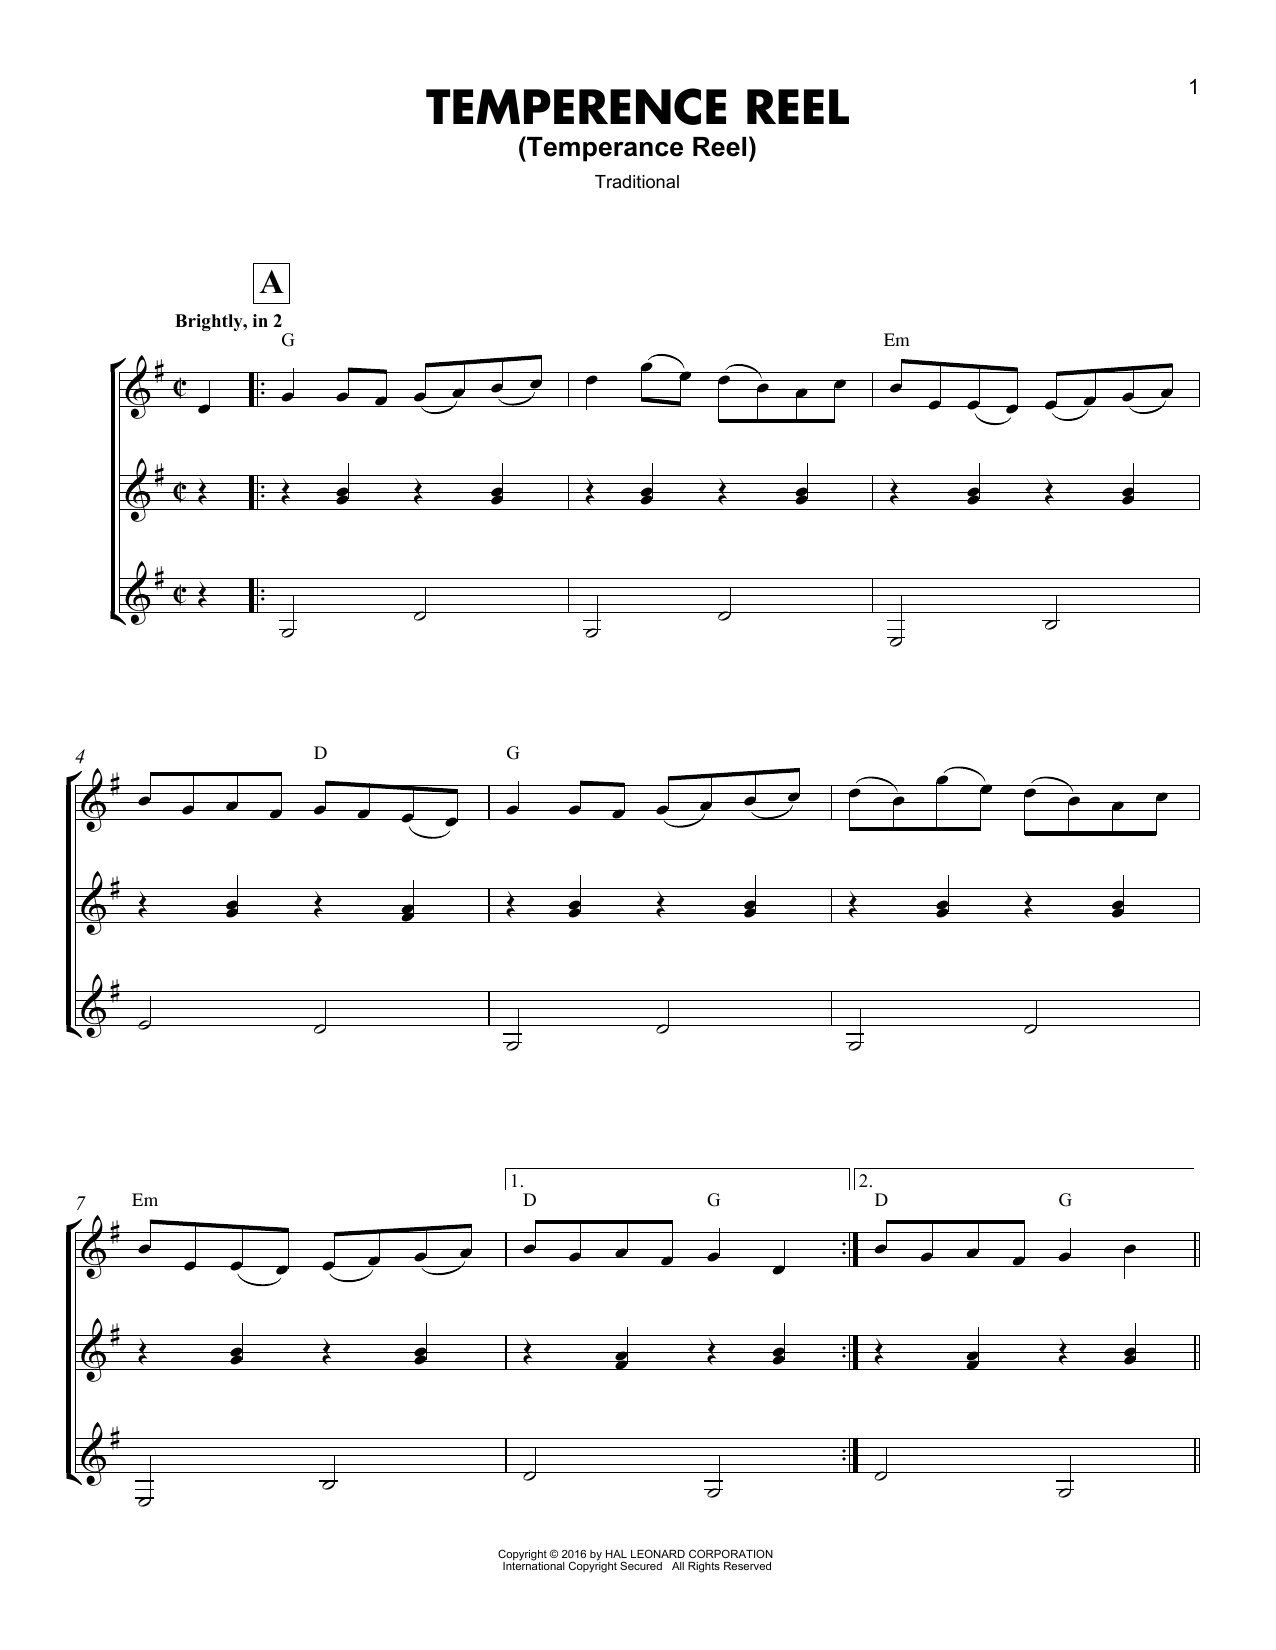 Traditional Temperence Reel (Temperance Reel) Sheet Music Notes & Chords for Banjo - Download or Print PDF